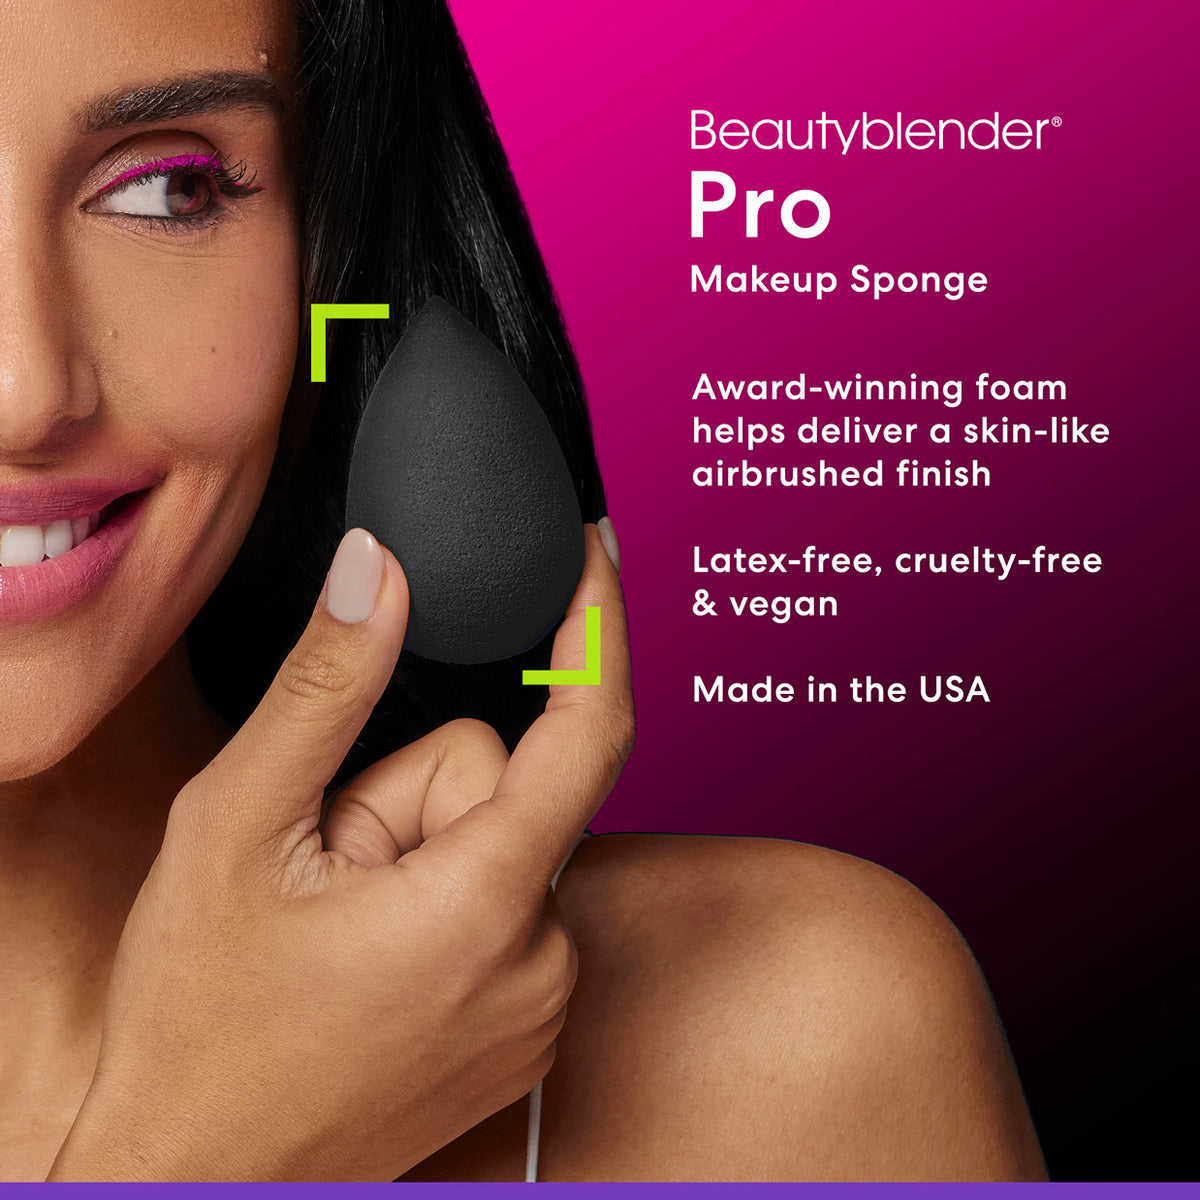 Beautyblender® Pro Makeup Sponge.